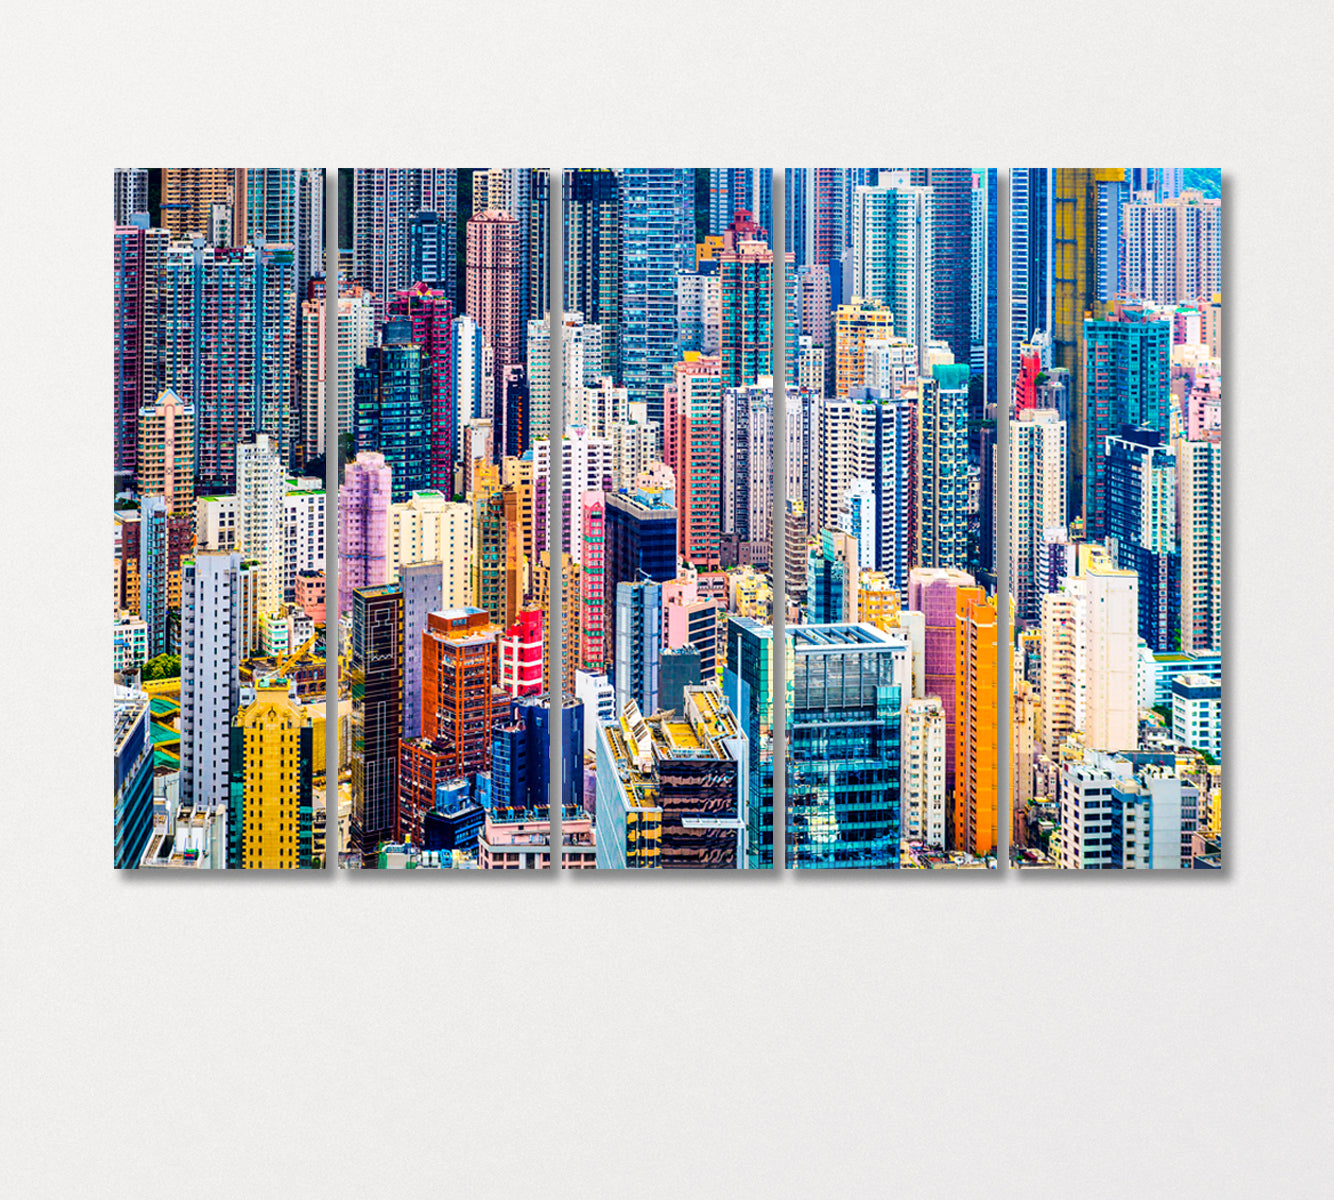 Colorful Hong Kong Skyscrapers Canvas Print-Canvas Print-CetArt-5 Panels-36x24 inches-CetArt